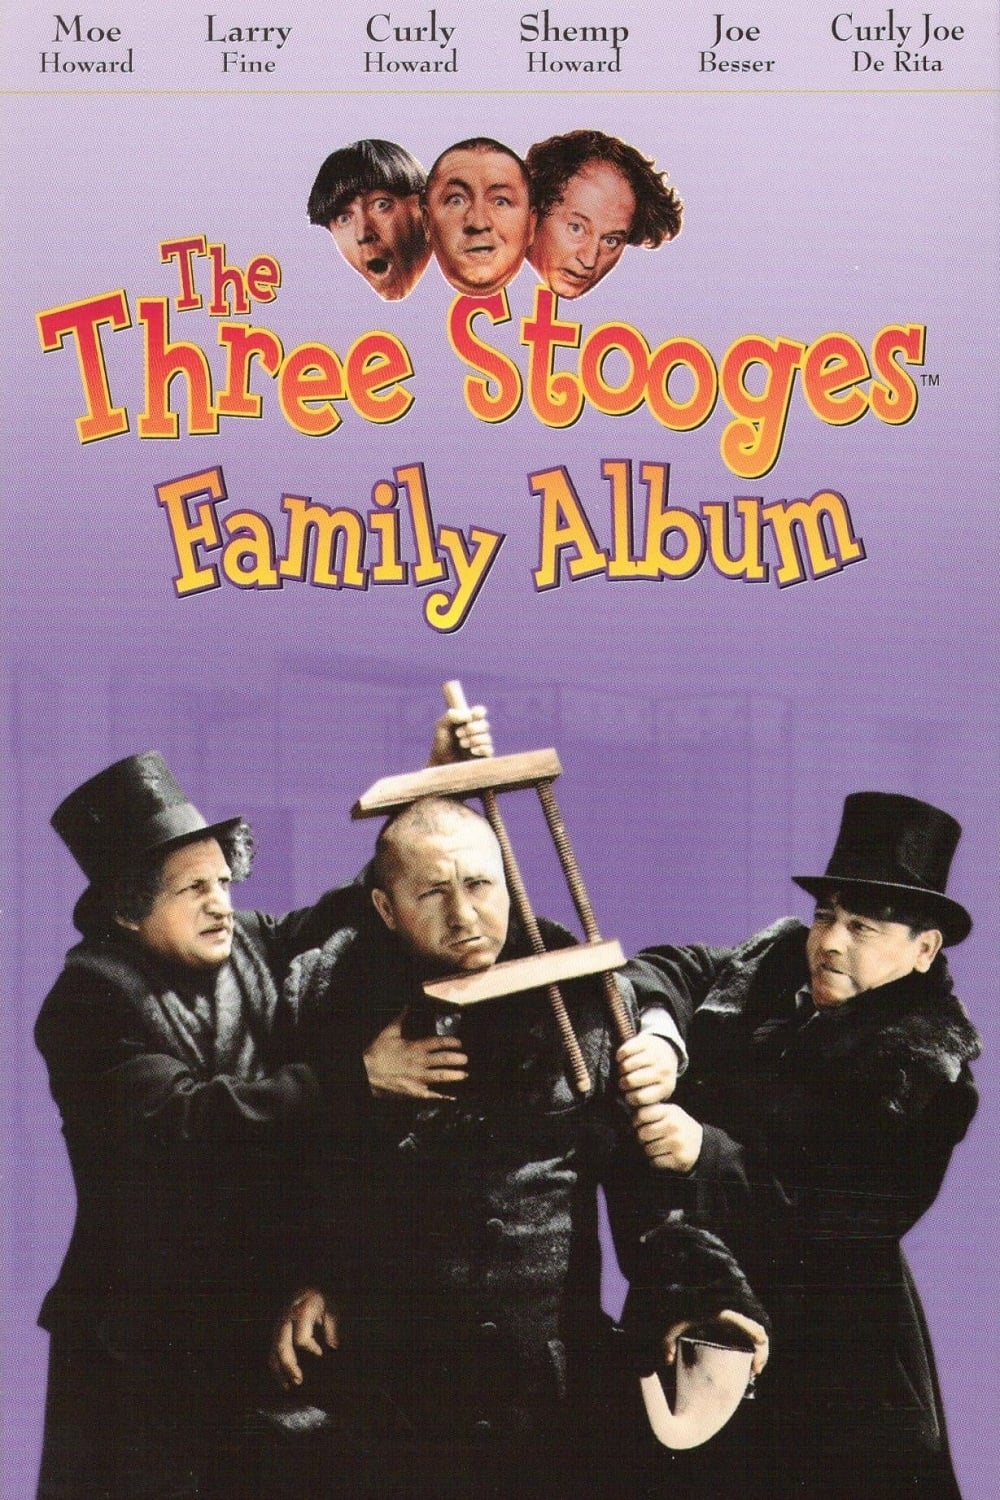 Three Stooges: Family Album